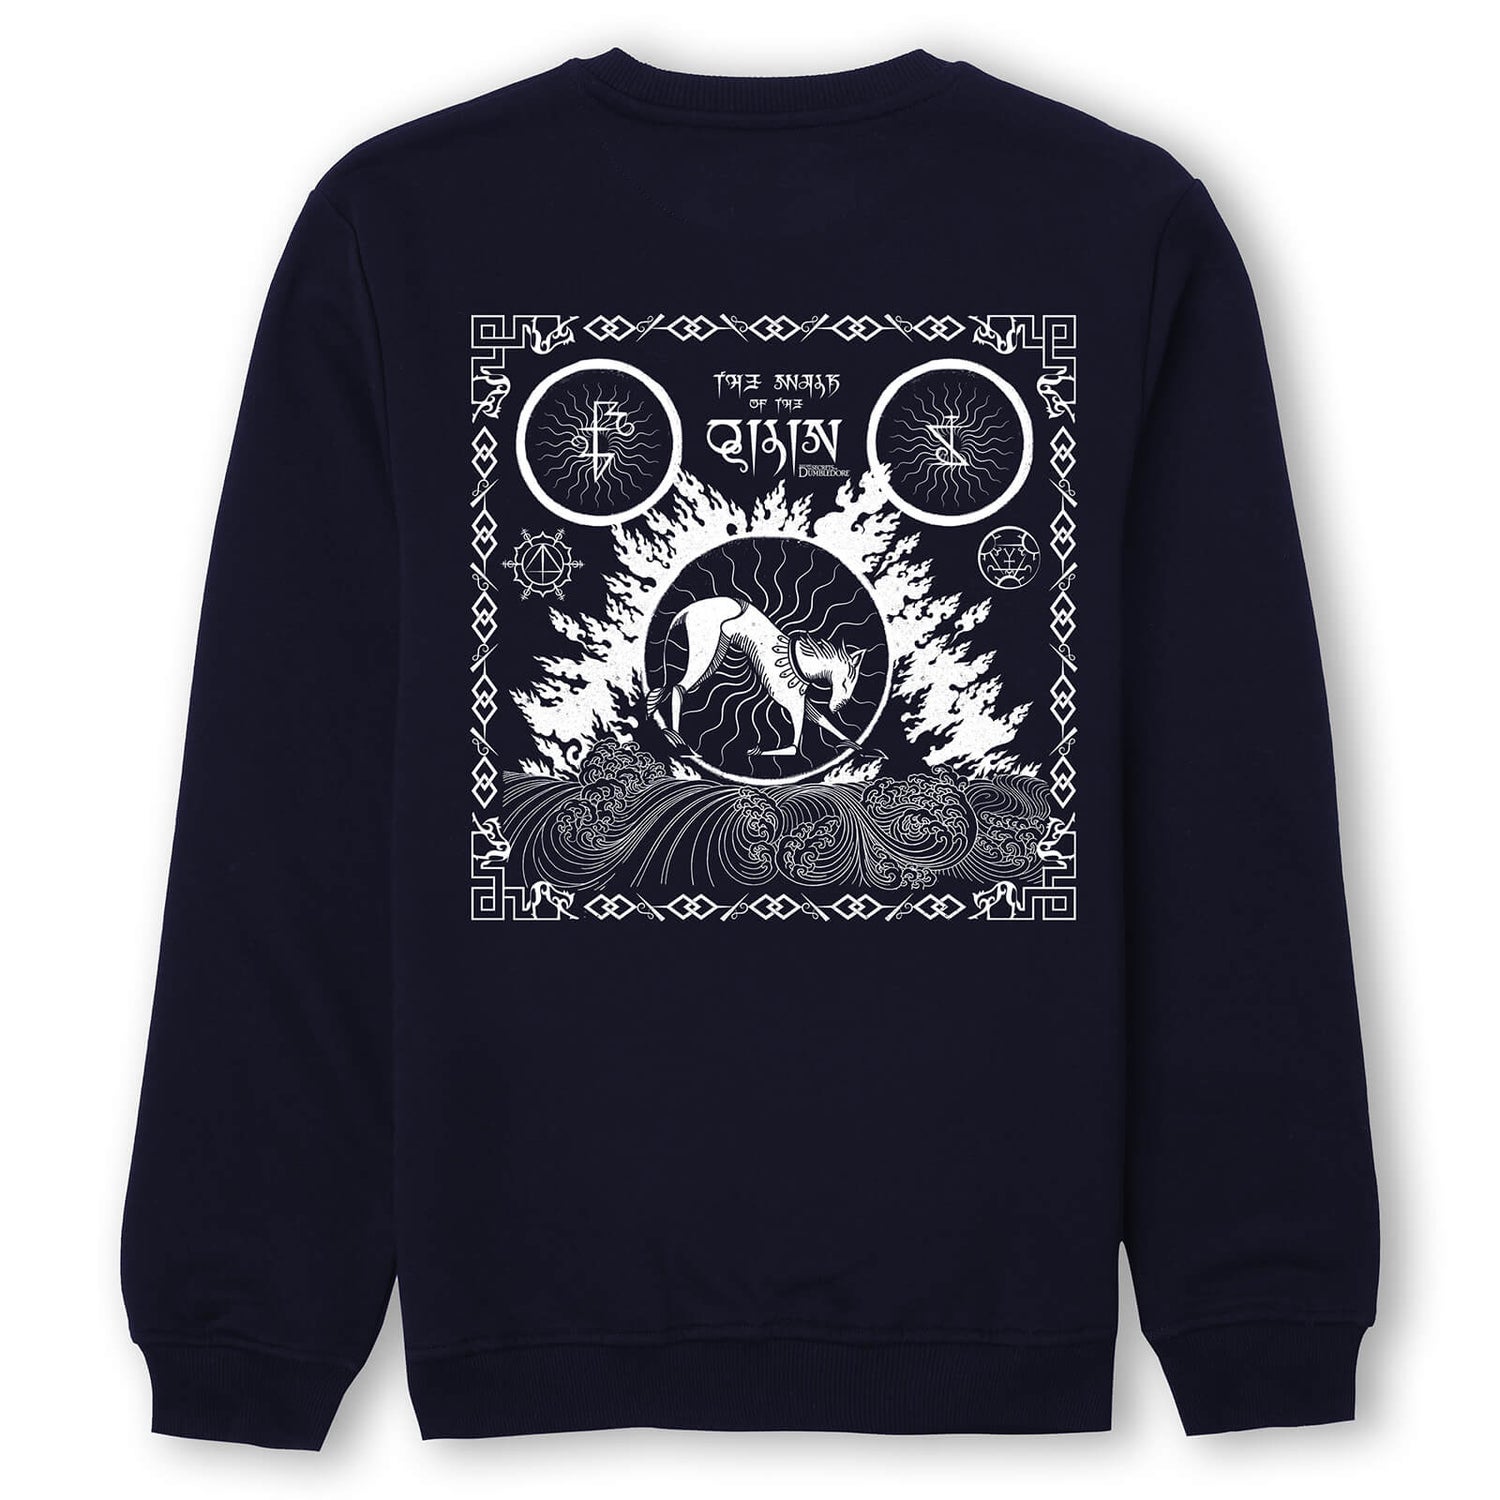 Fantastic Beasts Qilin Symbols Sweater - Marine